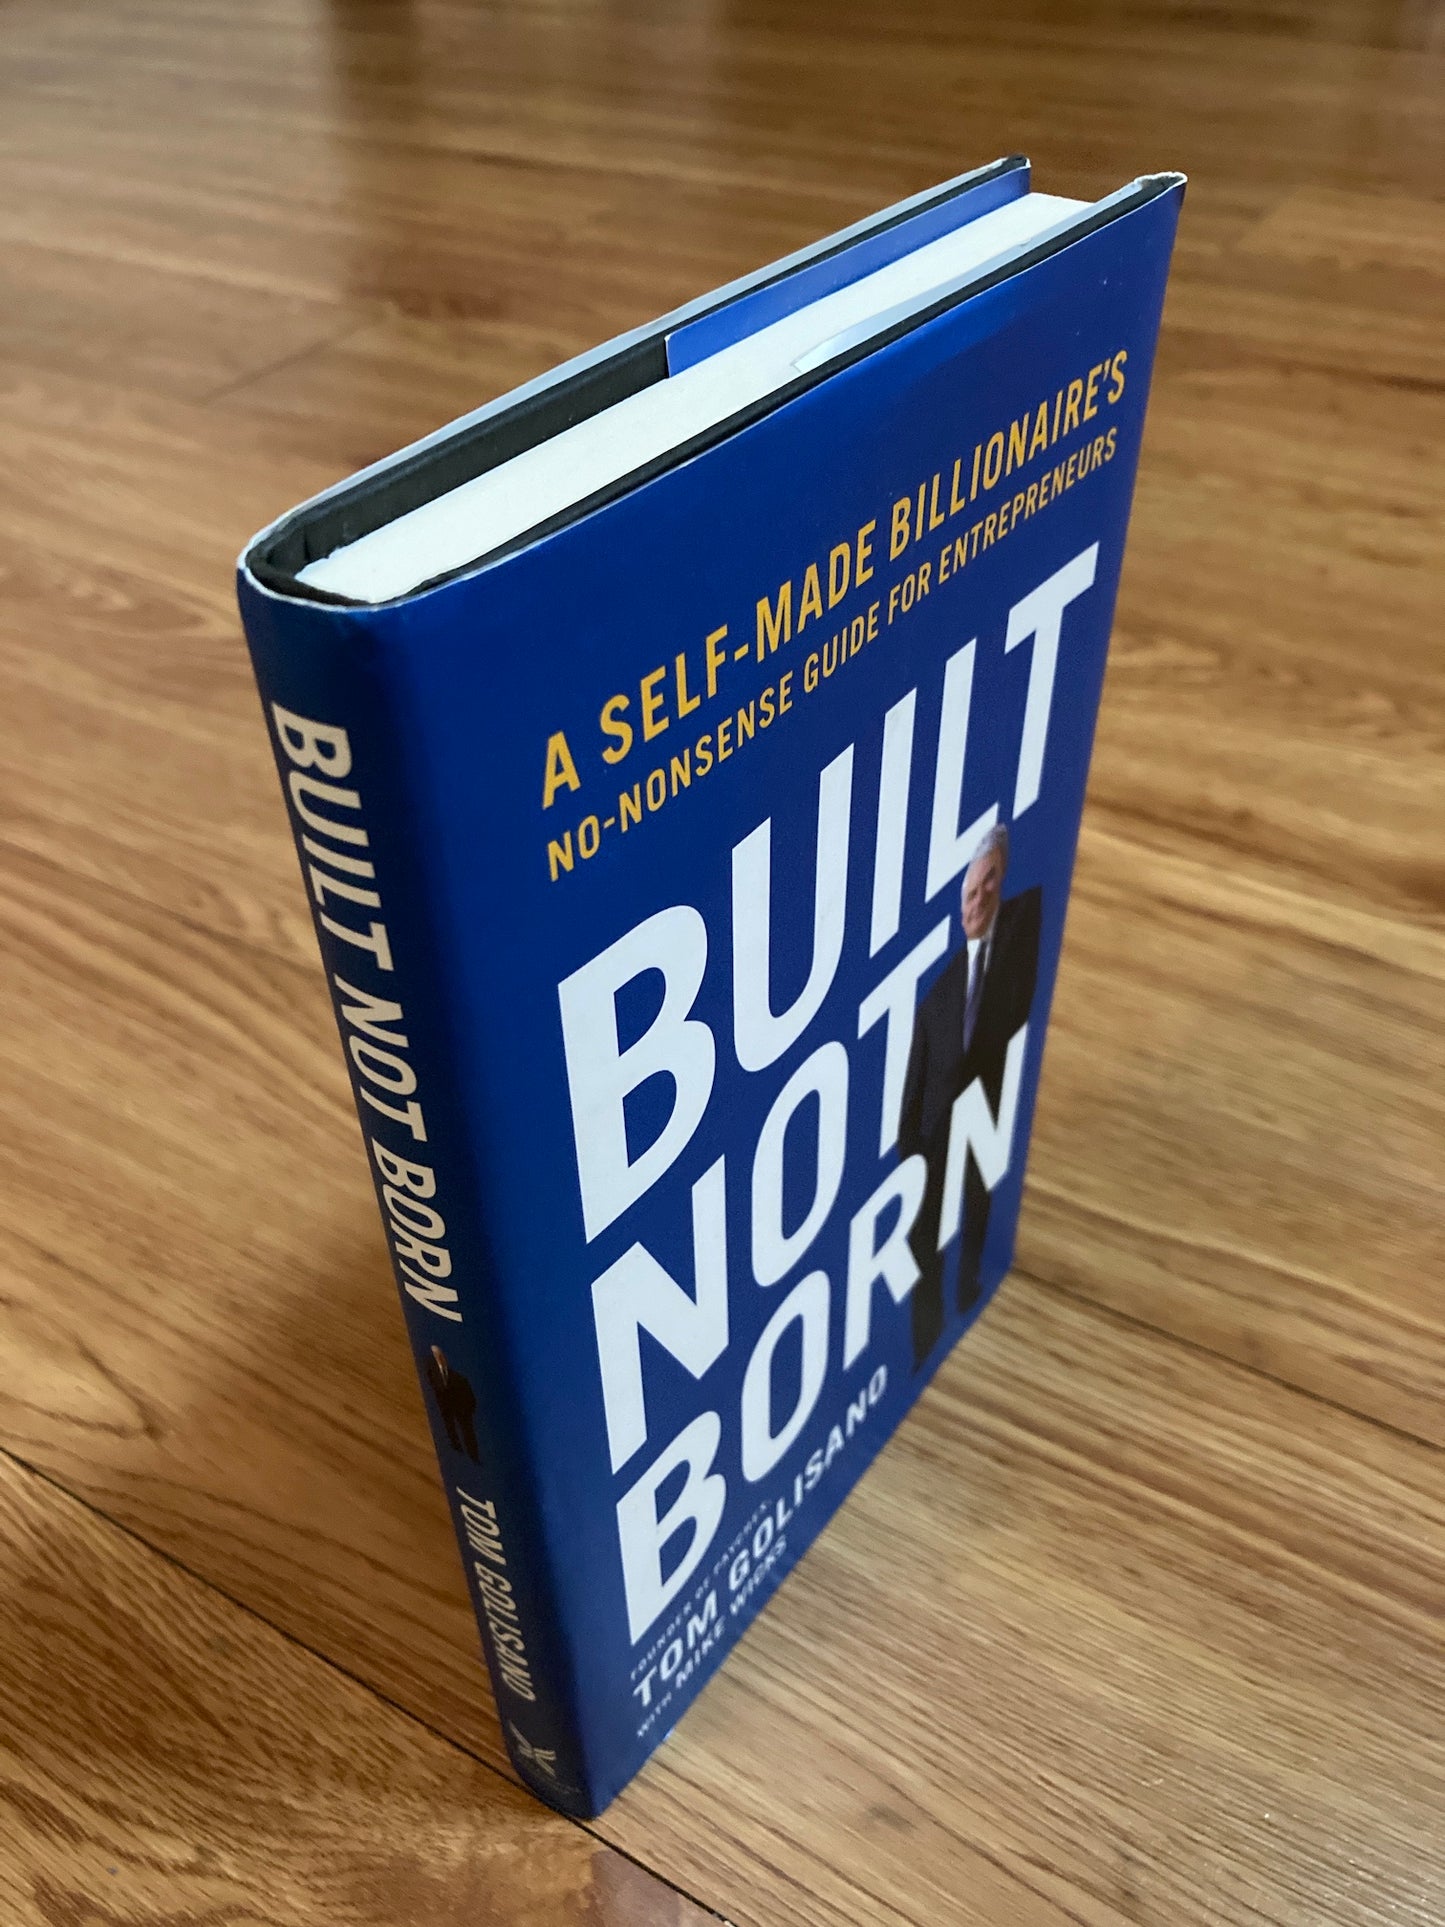 Built, Not Born: A Self-Made Billionaire's No-Nonsense Guide